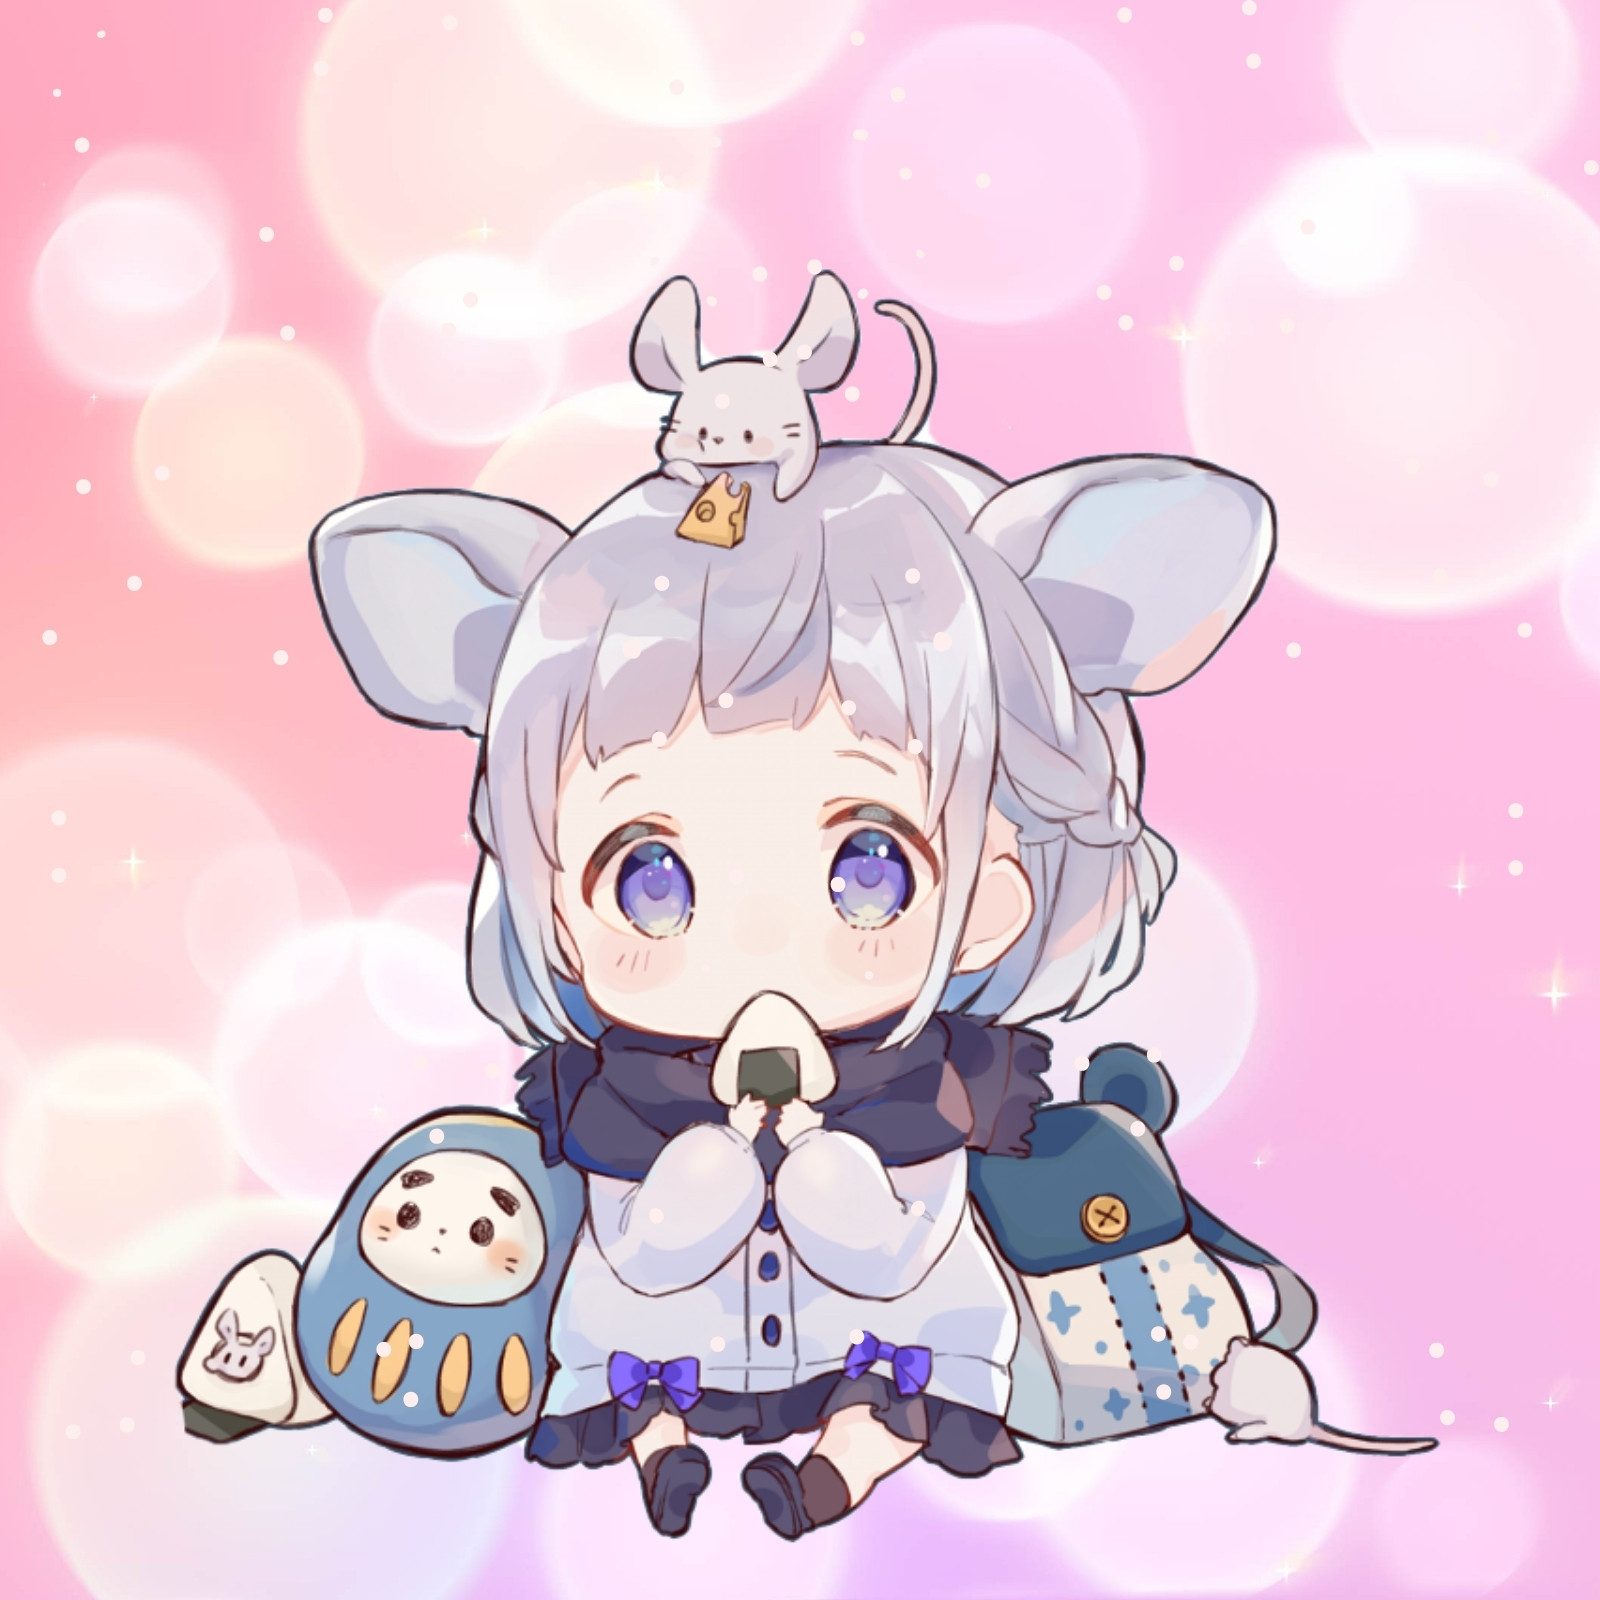 Cute chibi anime for avatar, icon, sticker or fanart